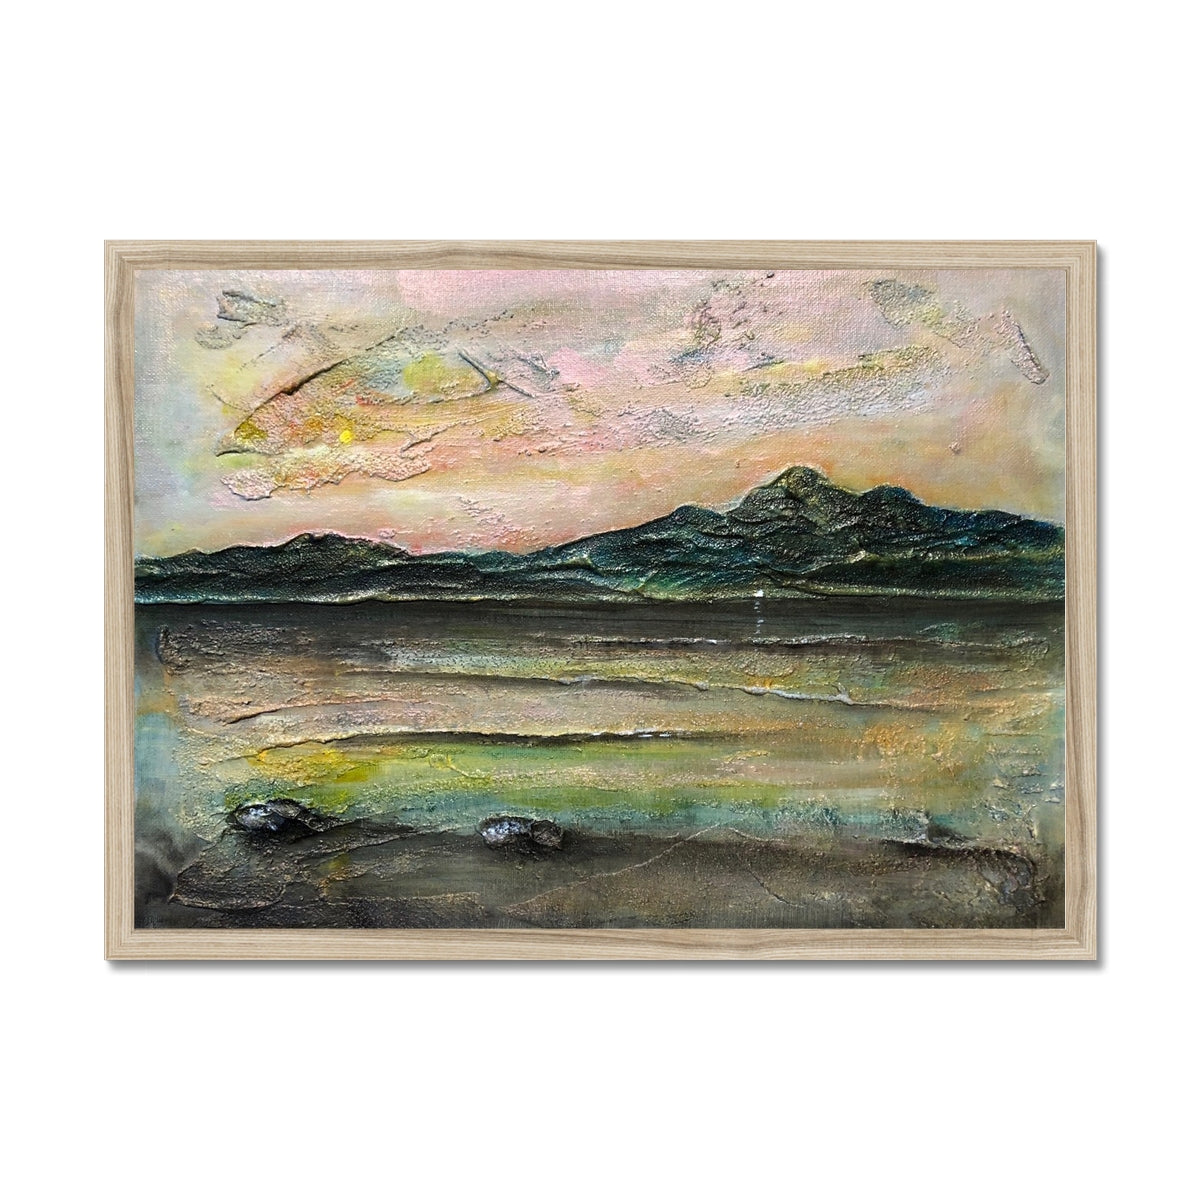 An Ethereal Loch Na Dal Skye Painting | Framed Prints From Scotland-Framed Prints-Scottish Lochs & Mountains Art Gallery-A2 Landscape-Natural Frame-Paintings, Prints, Homeware, Art Gifts From Scotland By Scottish Artist Kevin Hunter